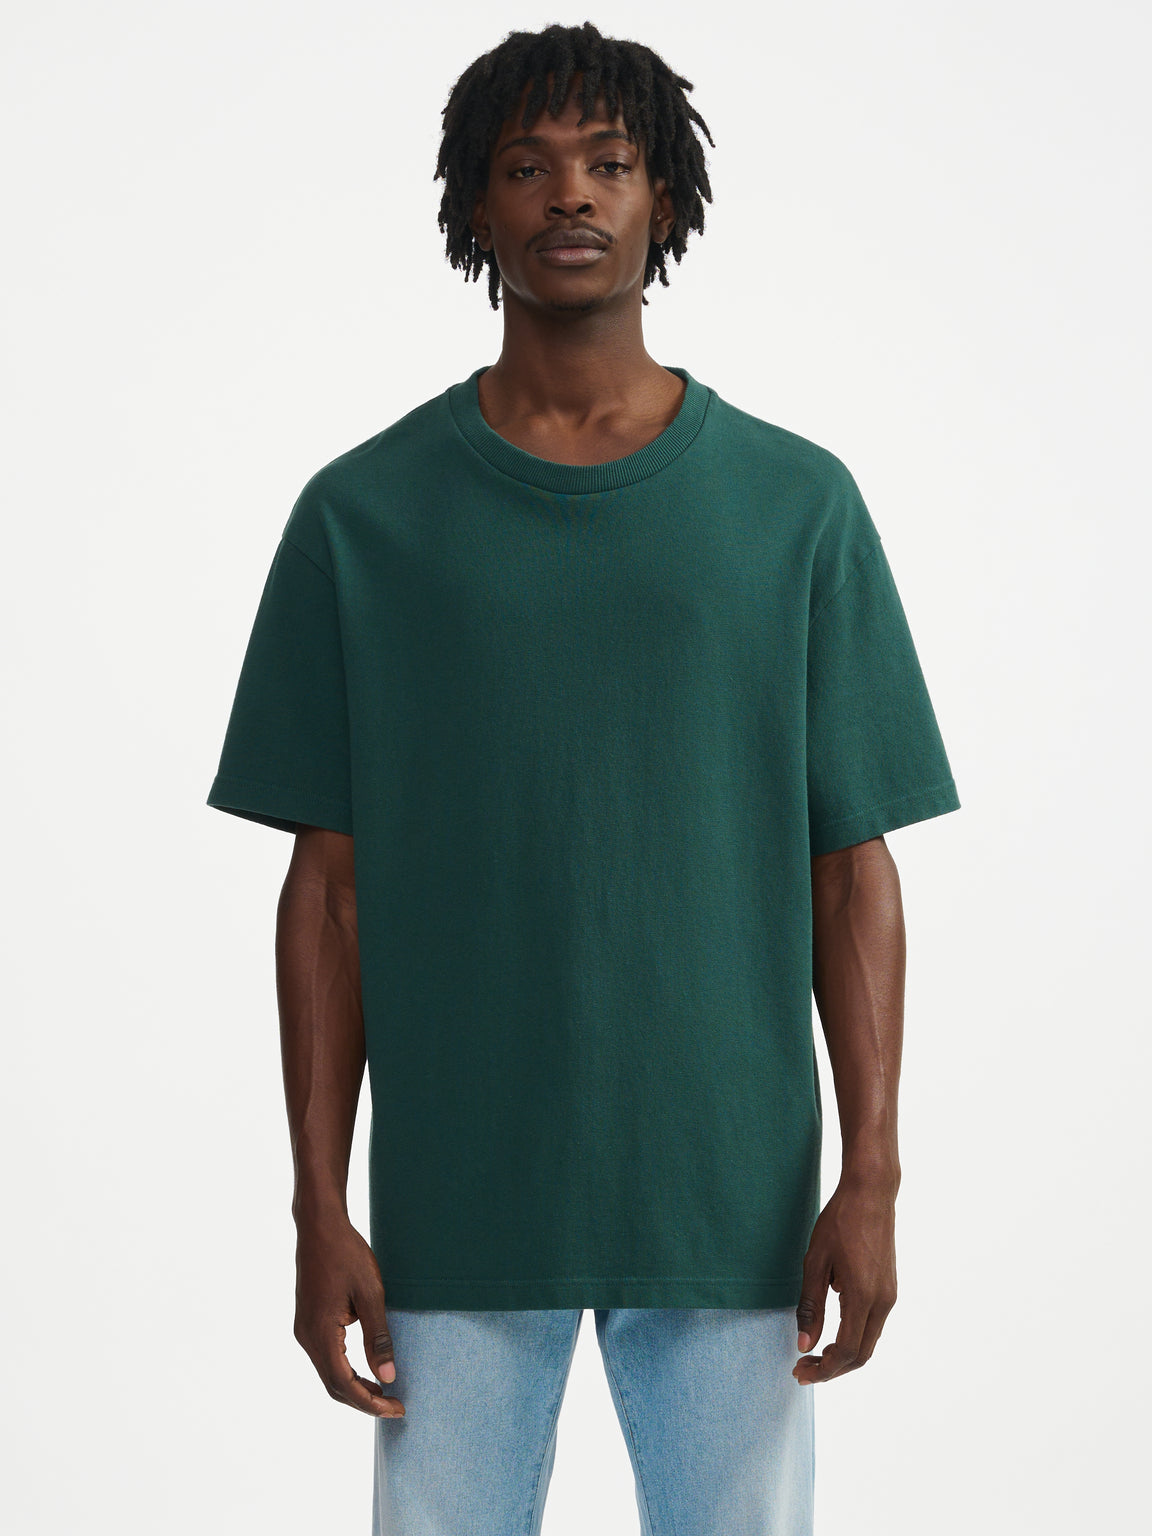 Vlugs T-shirt - Green | Men Collection | Bellerose